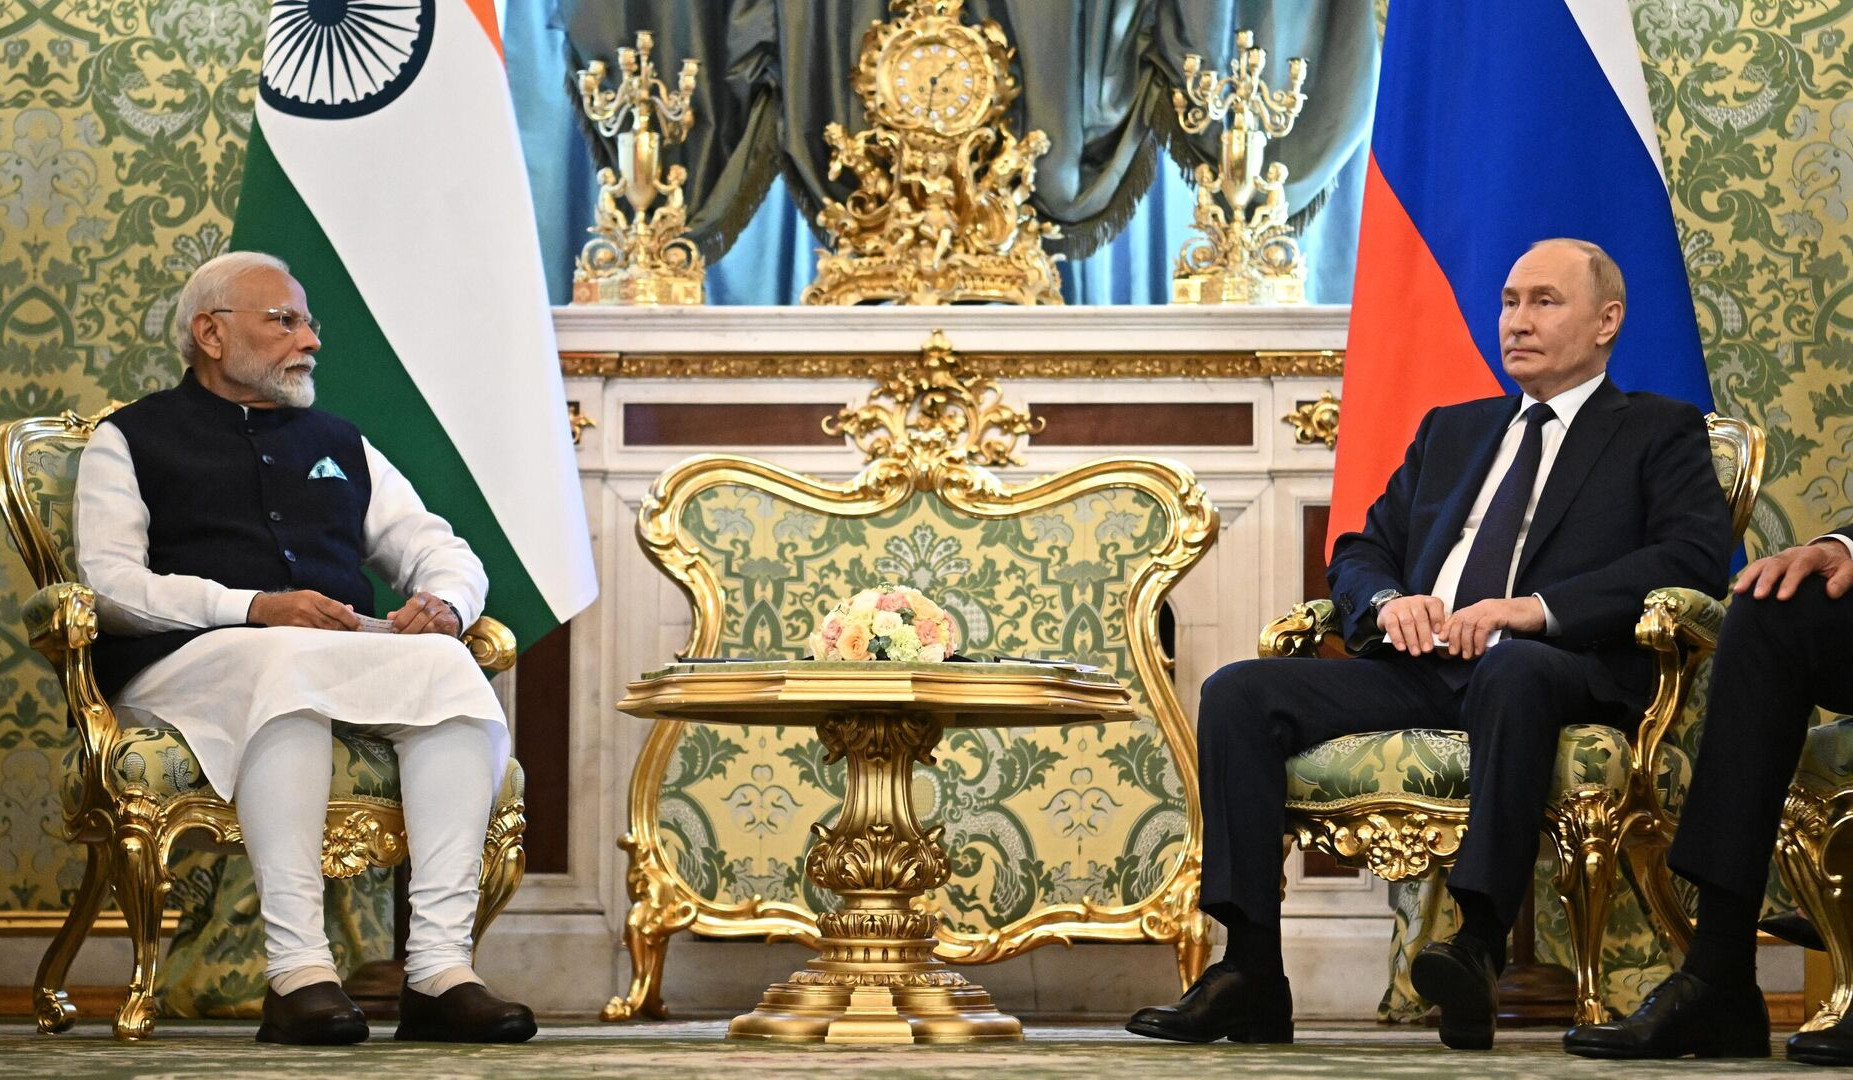 Putin says Russia and India maintain a privileged strategic partnership